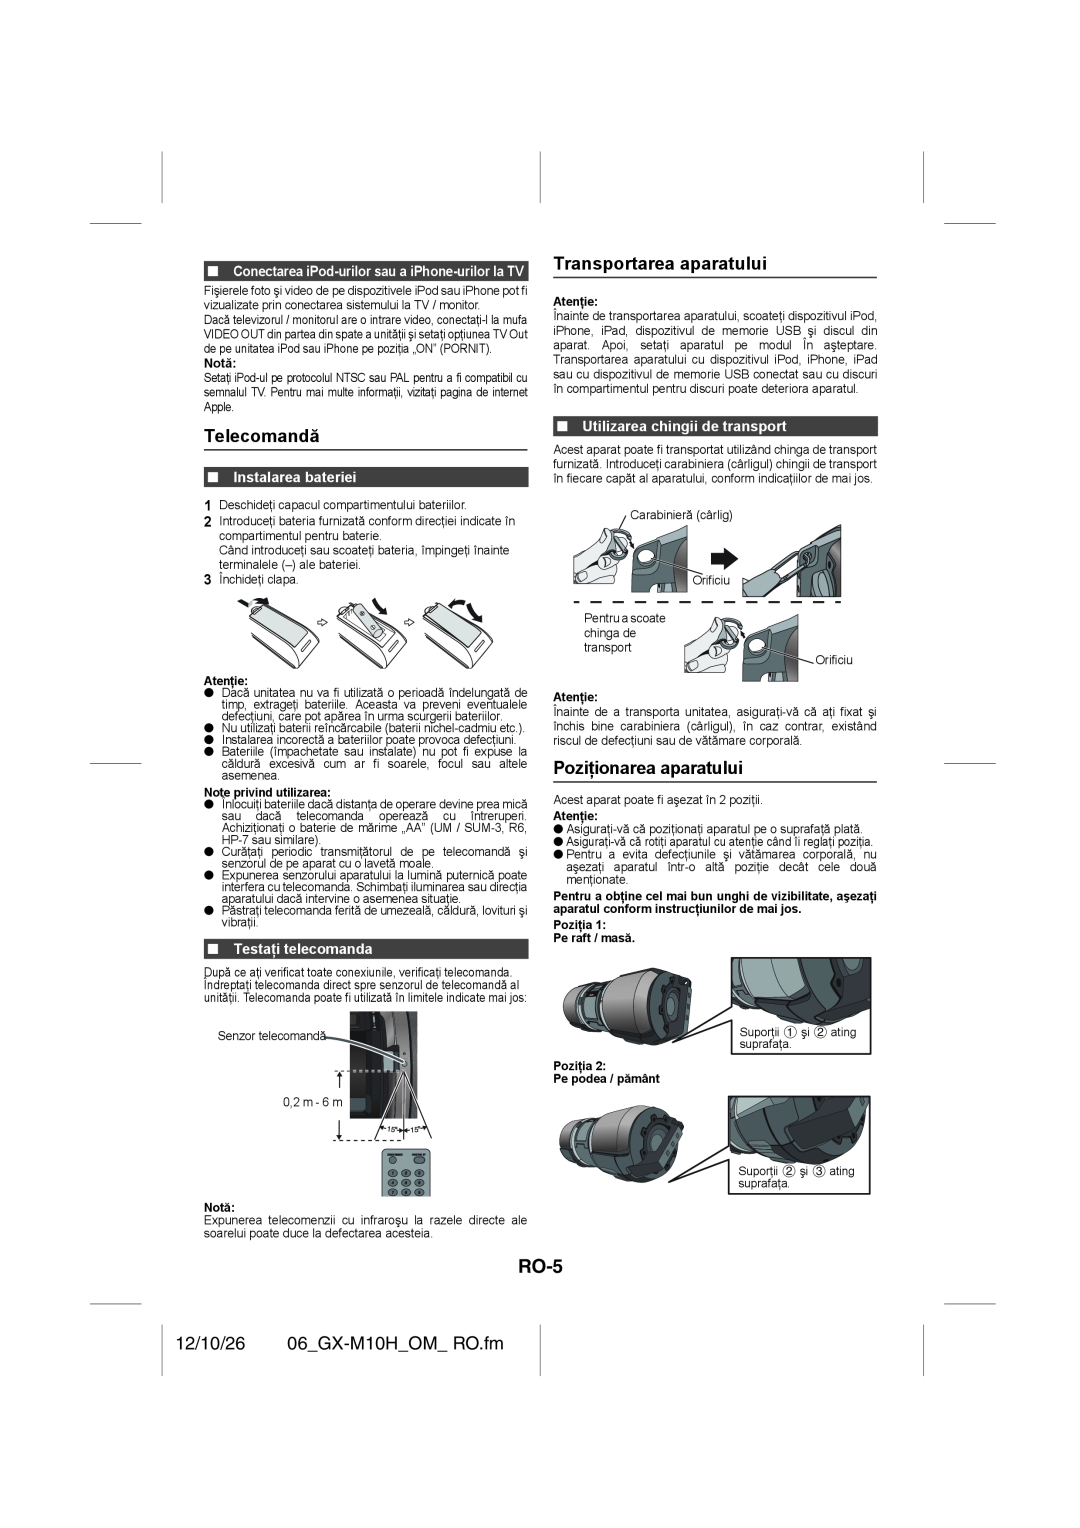 Sharp GX-M10H(OR), GX-M10H(RD) operation manual RO-5, 12/10/26 06 GX-M10H OM RO.fm, Instalarea bateriei, Testaţi telecomanda 